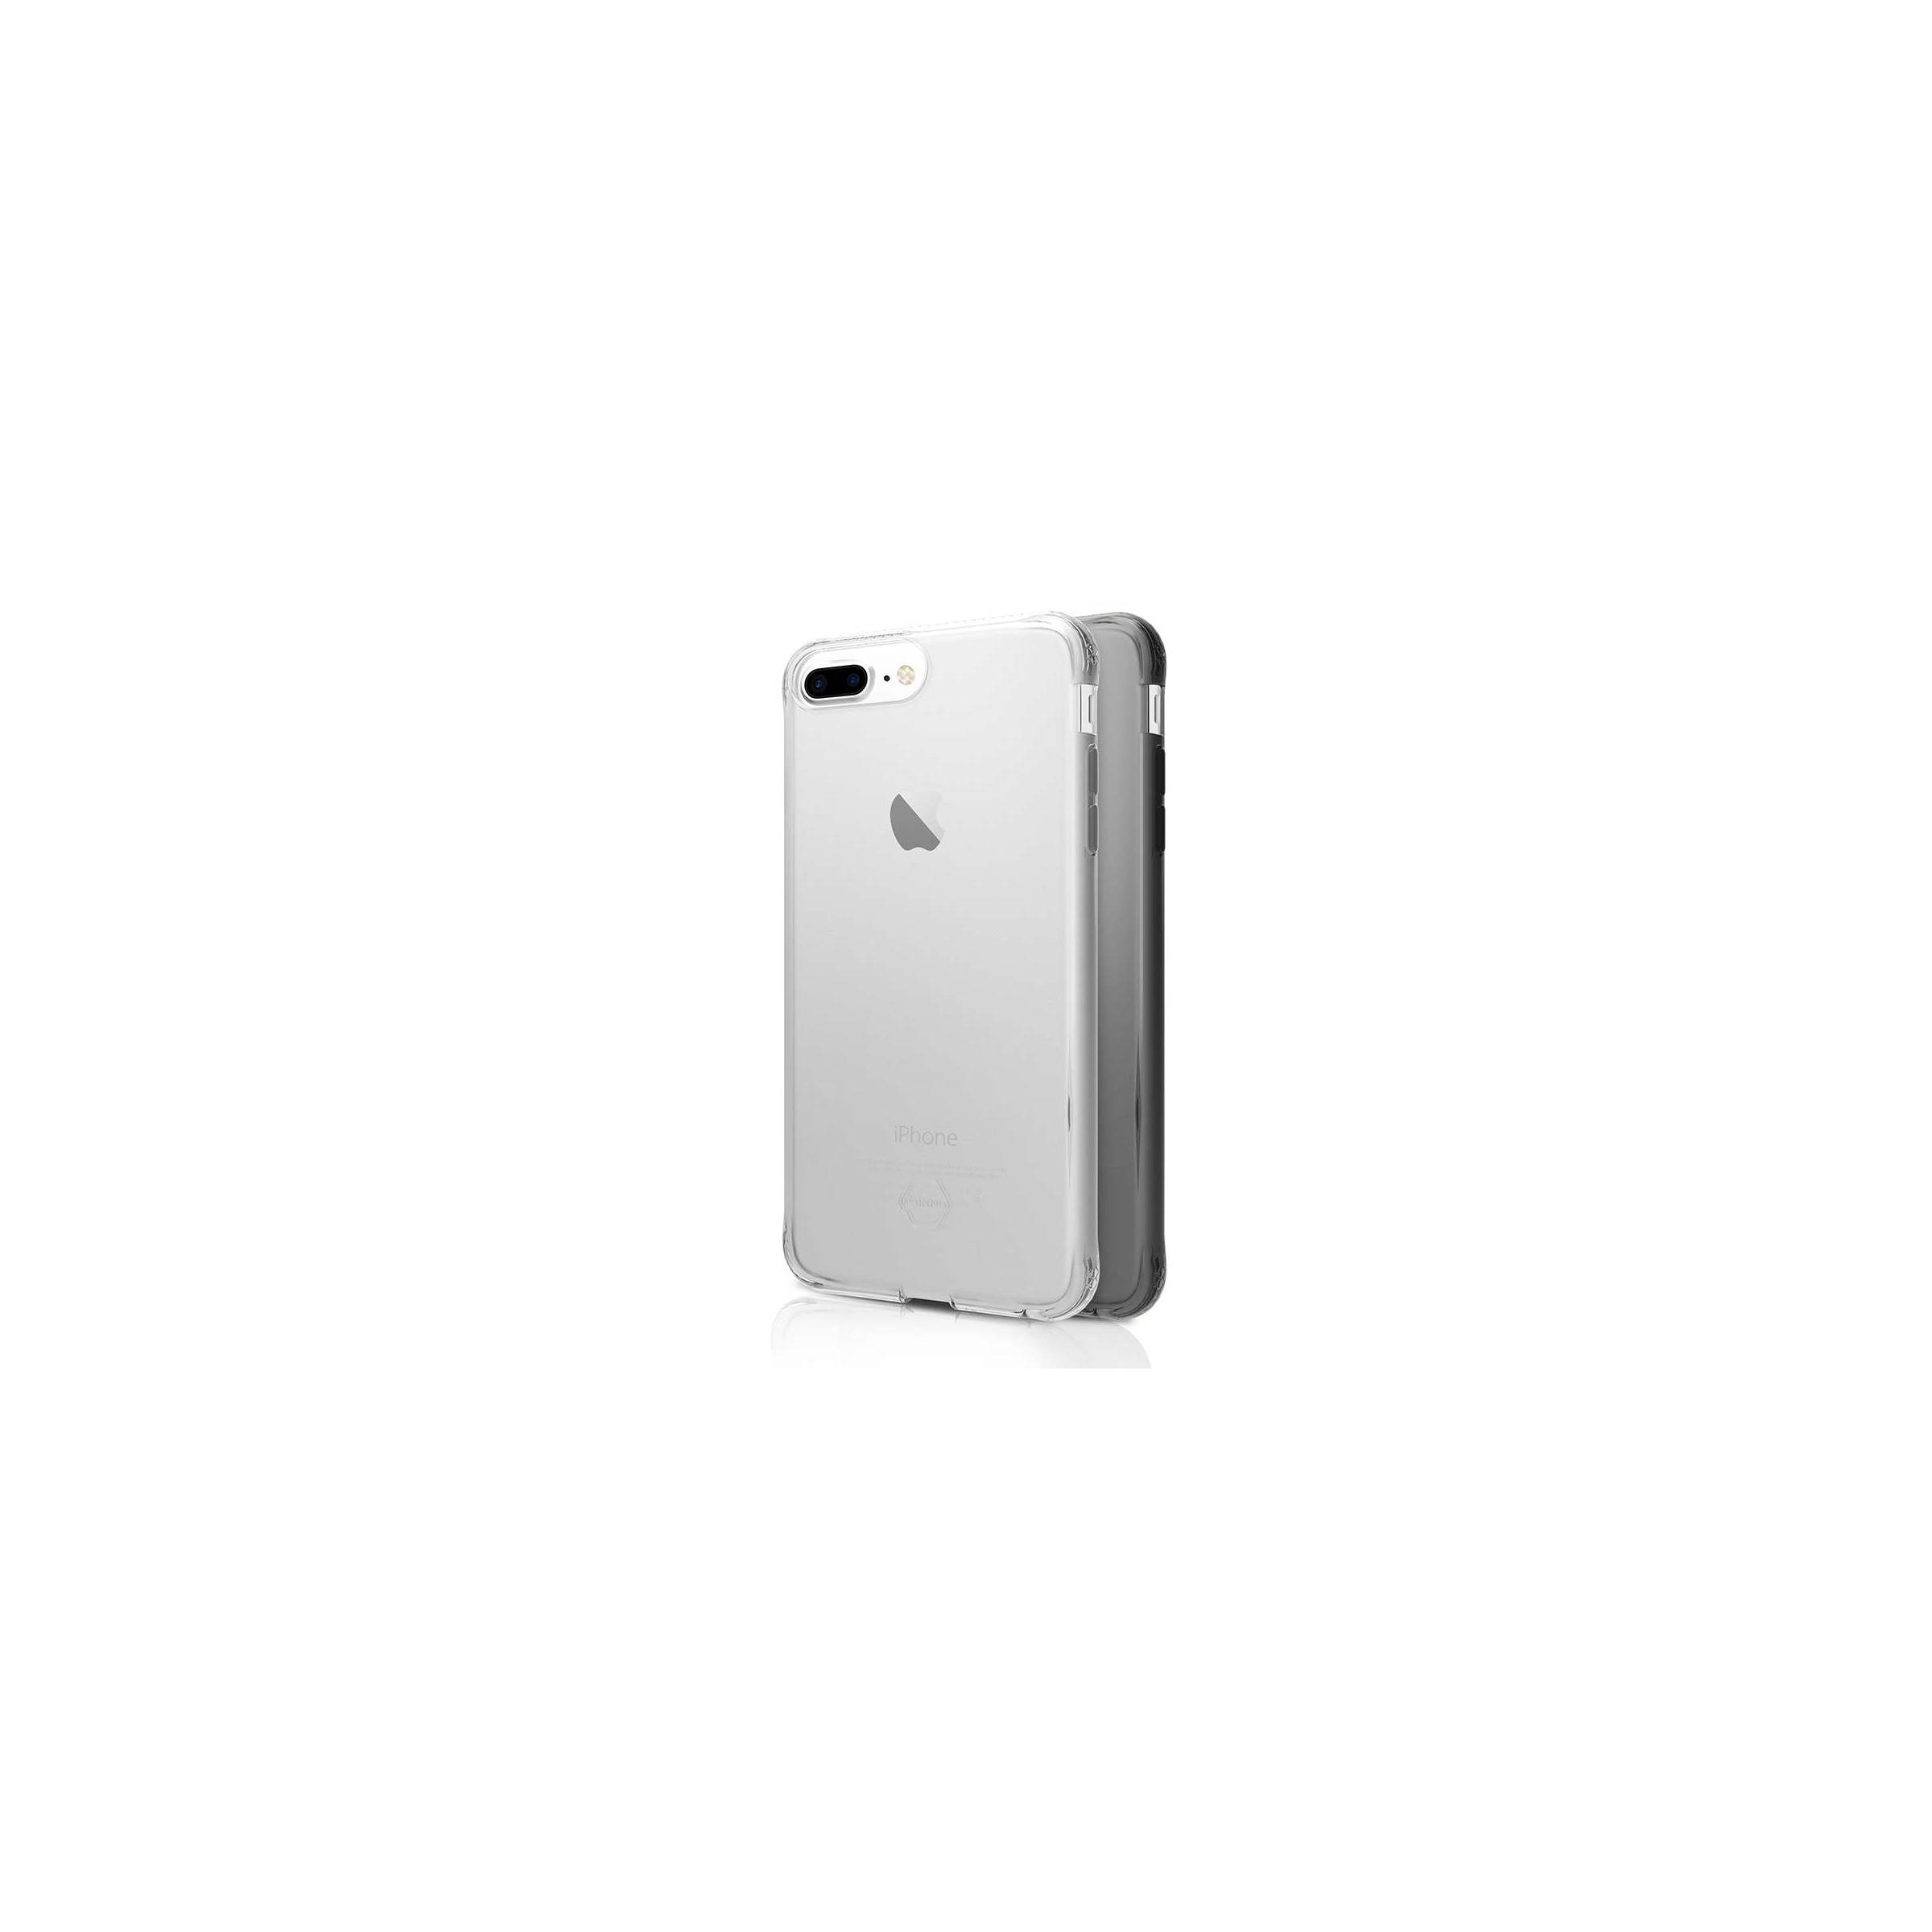 Bilde av Itskins Slim Silikon Protect Gel Iphone 6, 6s, 7 & 8 Pluss Deksel Dobbel 2x Pakke, Farge Klar & Sort